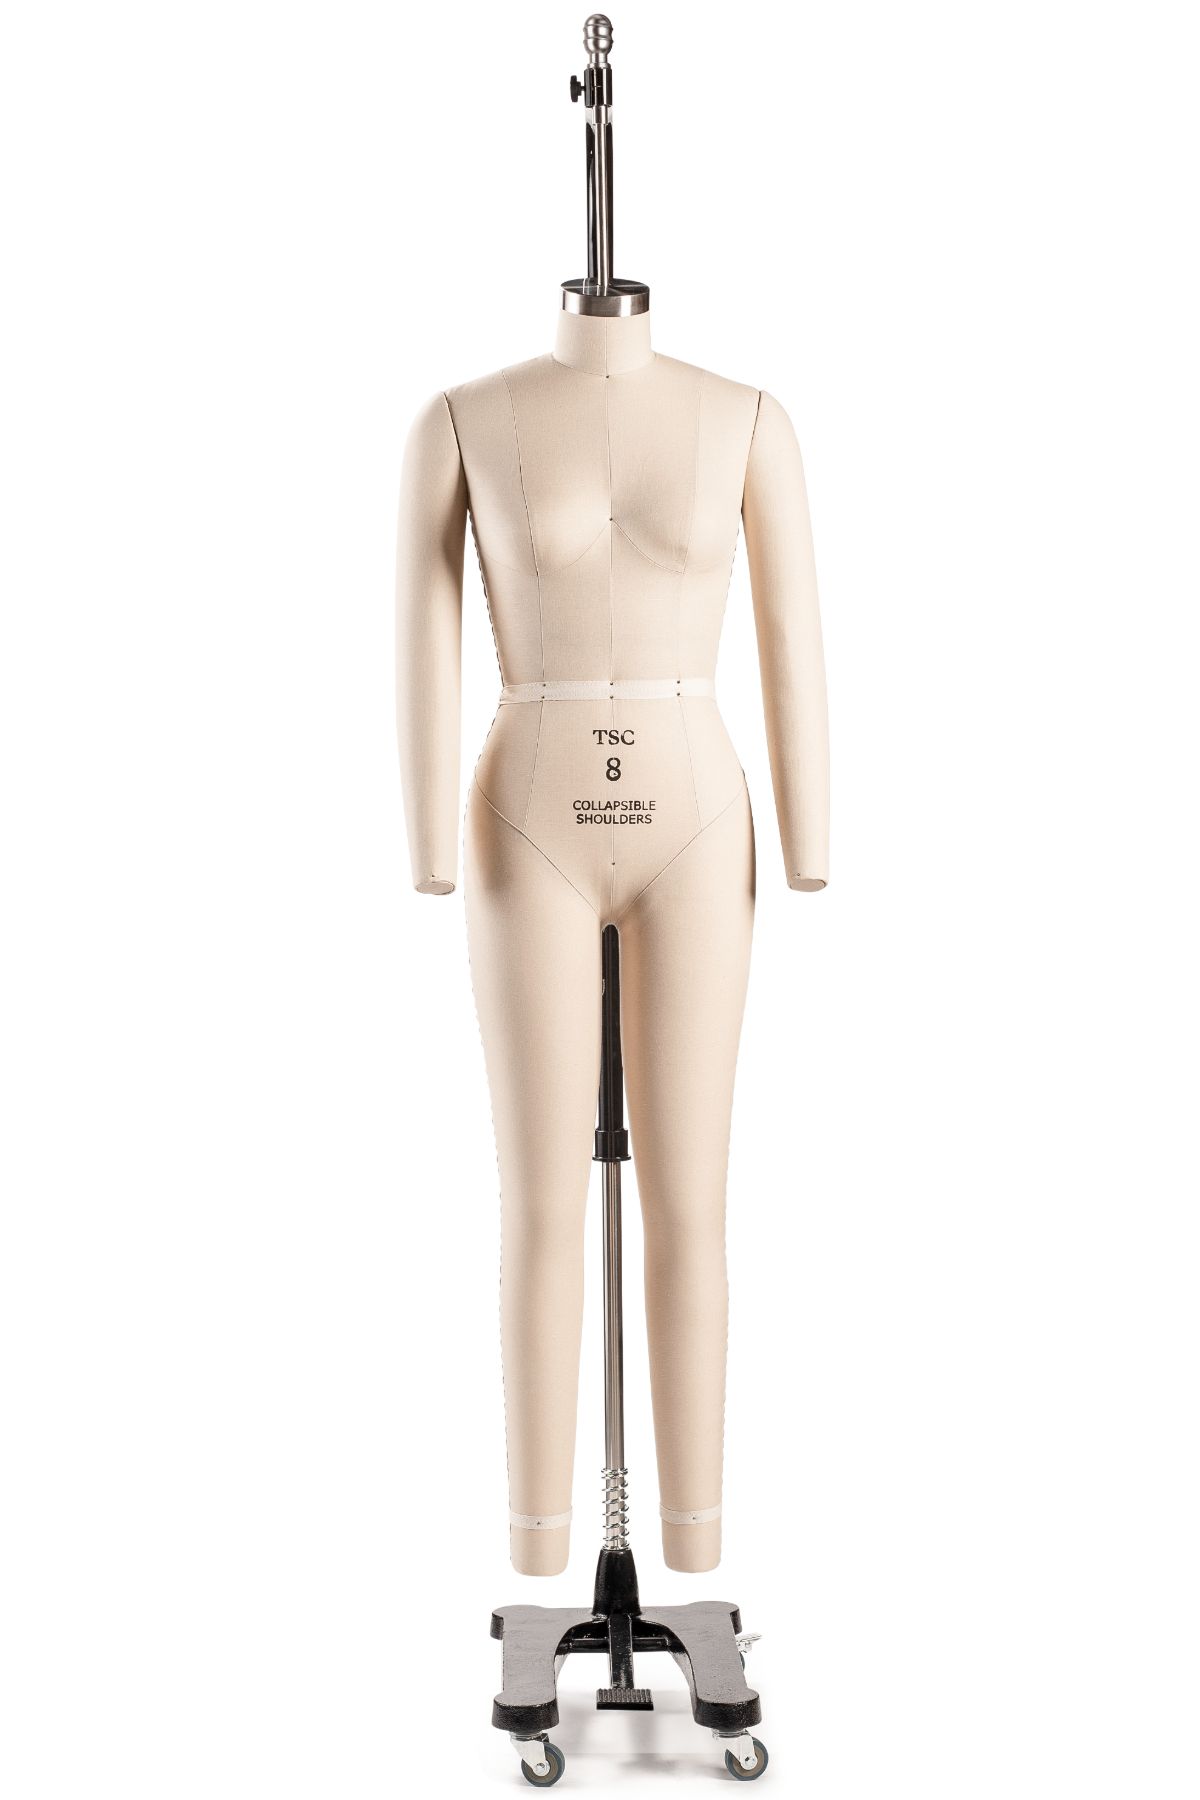 white torso-F-5 dress form+2 nylon covers Female mannequin for pants 